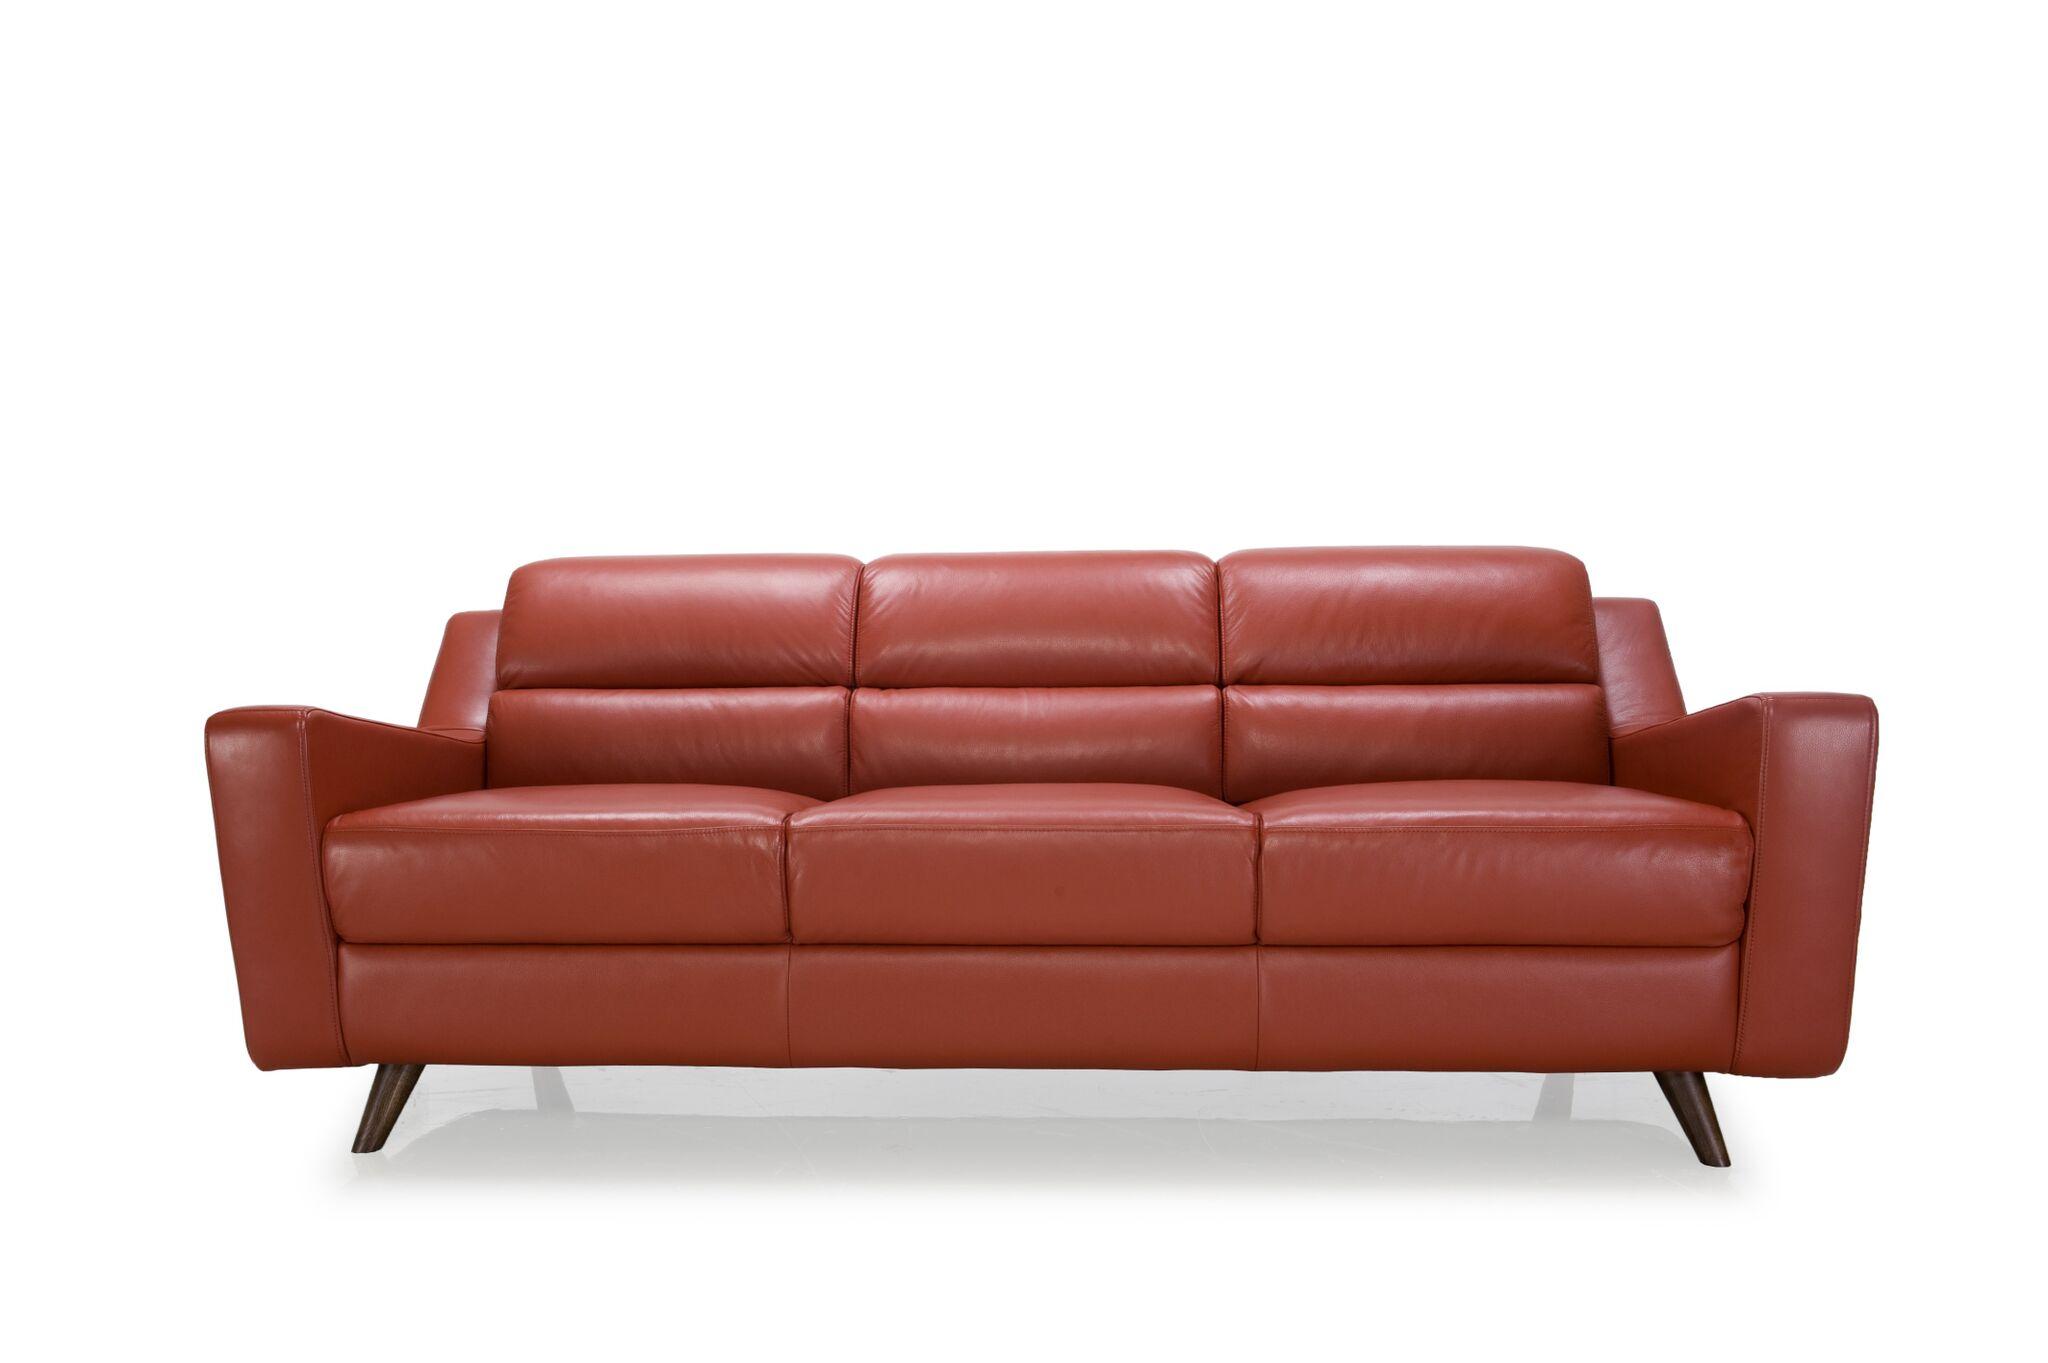 

    
Moroni Lucia 358 Brick Red Top Grain Leather Upholstery Mid-Century Sofa Set 3Pcs
